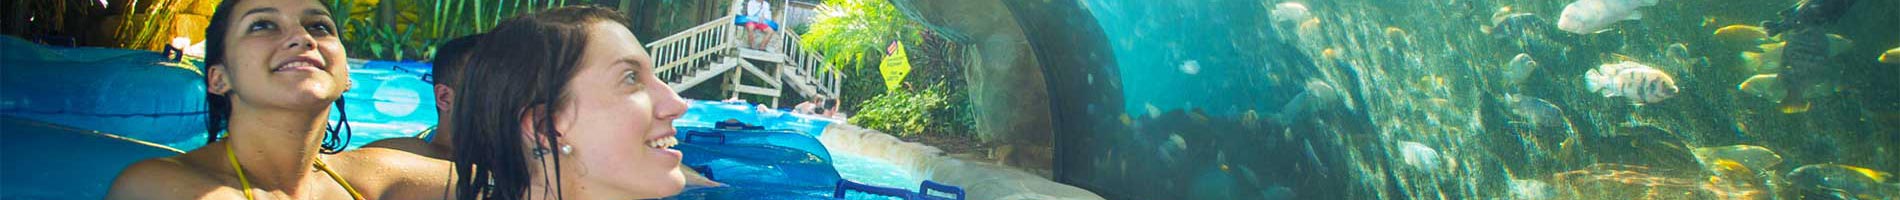 Fish grotto at Aquatica Orlando